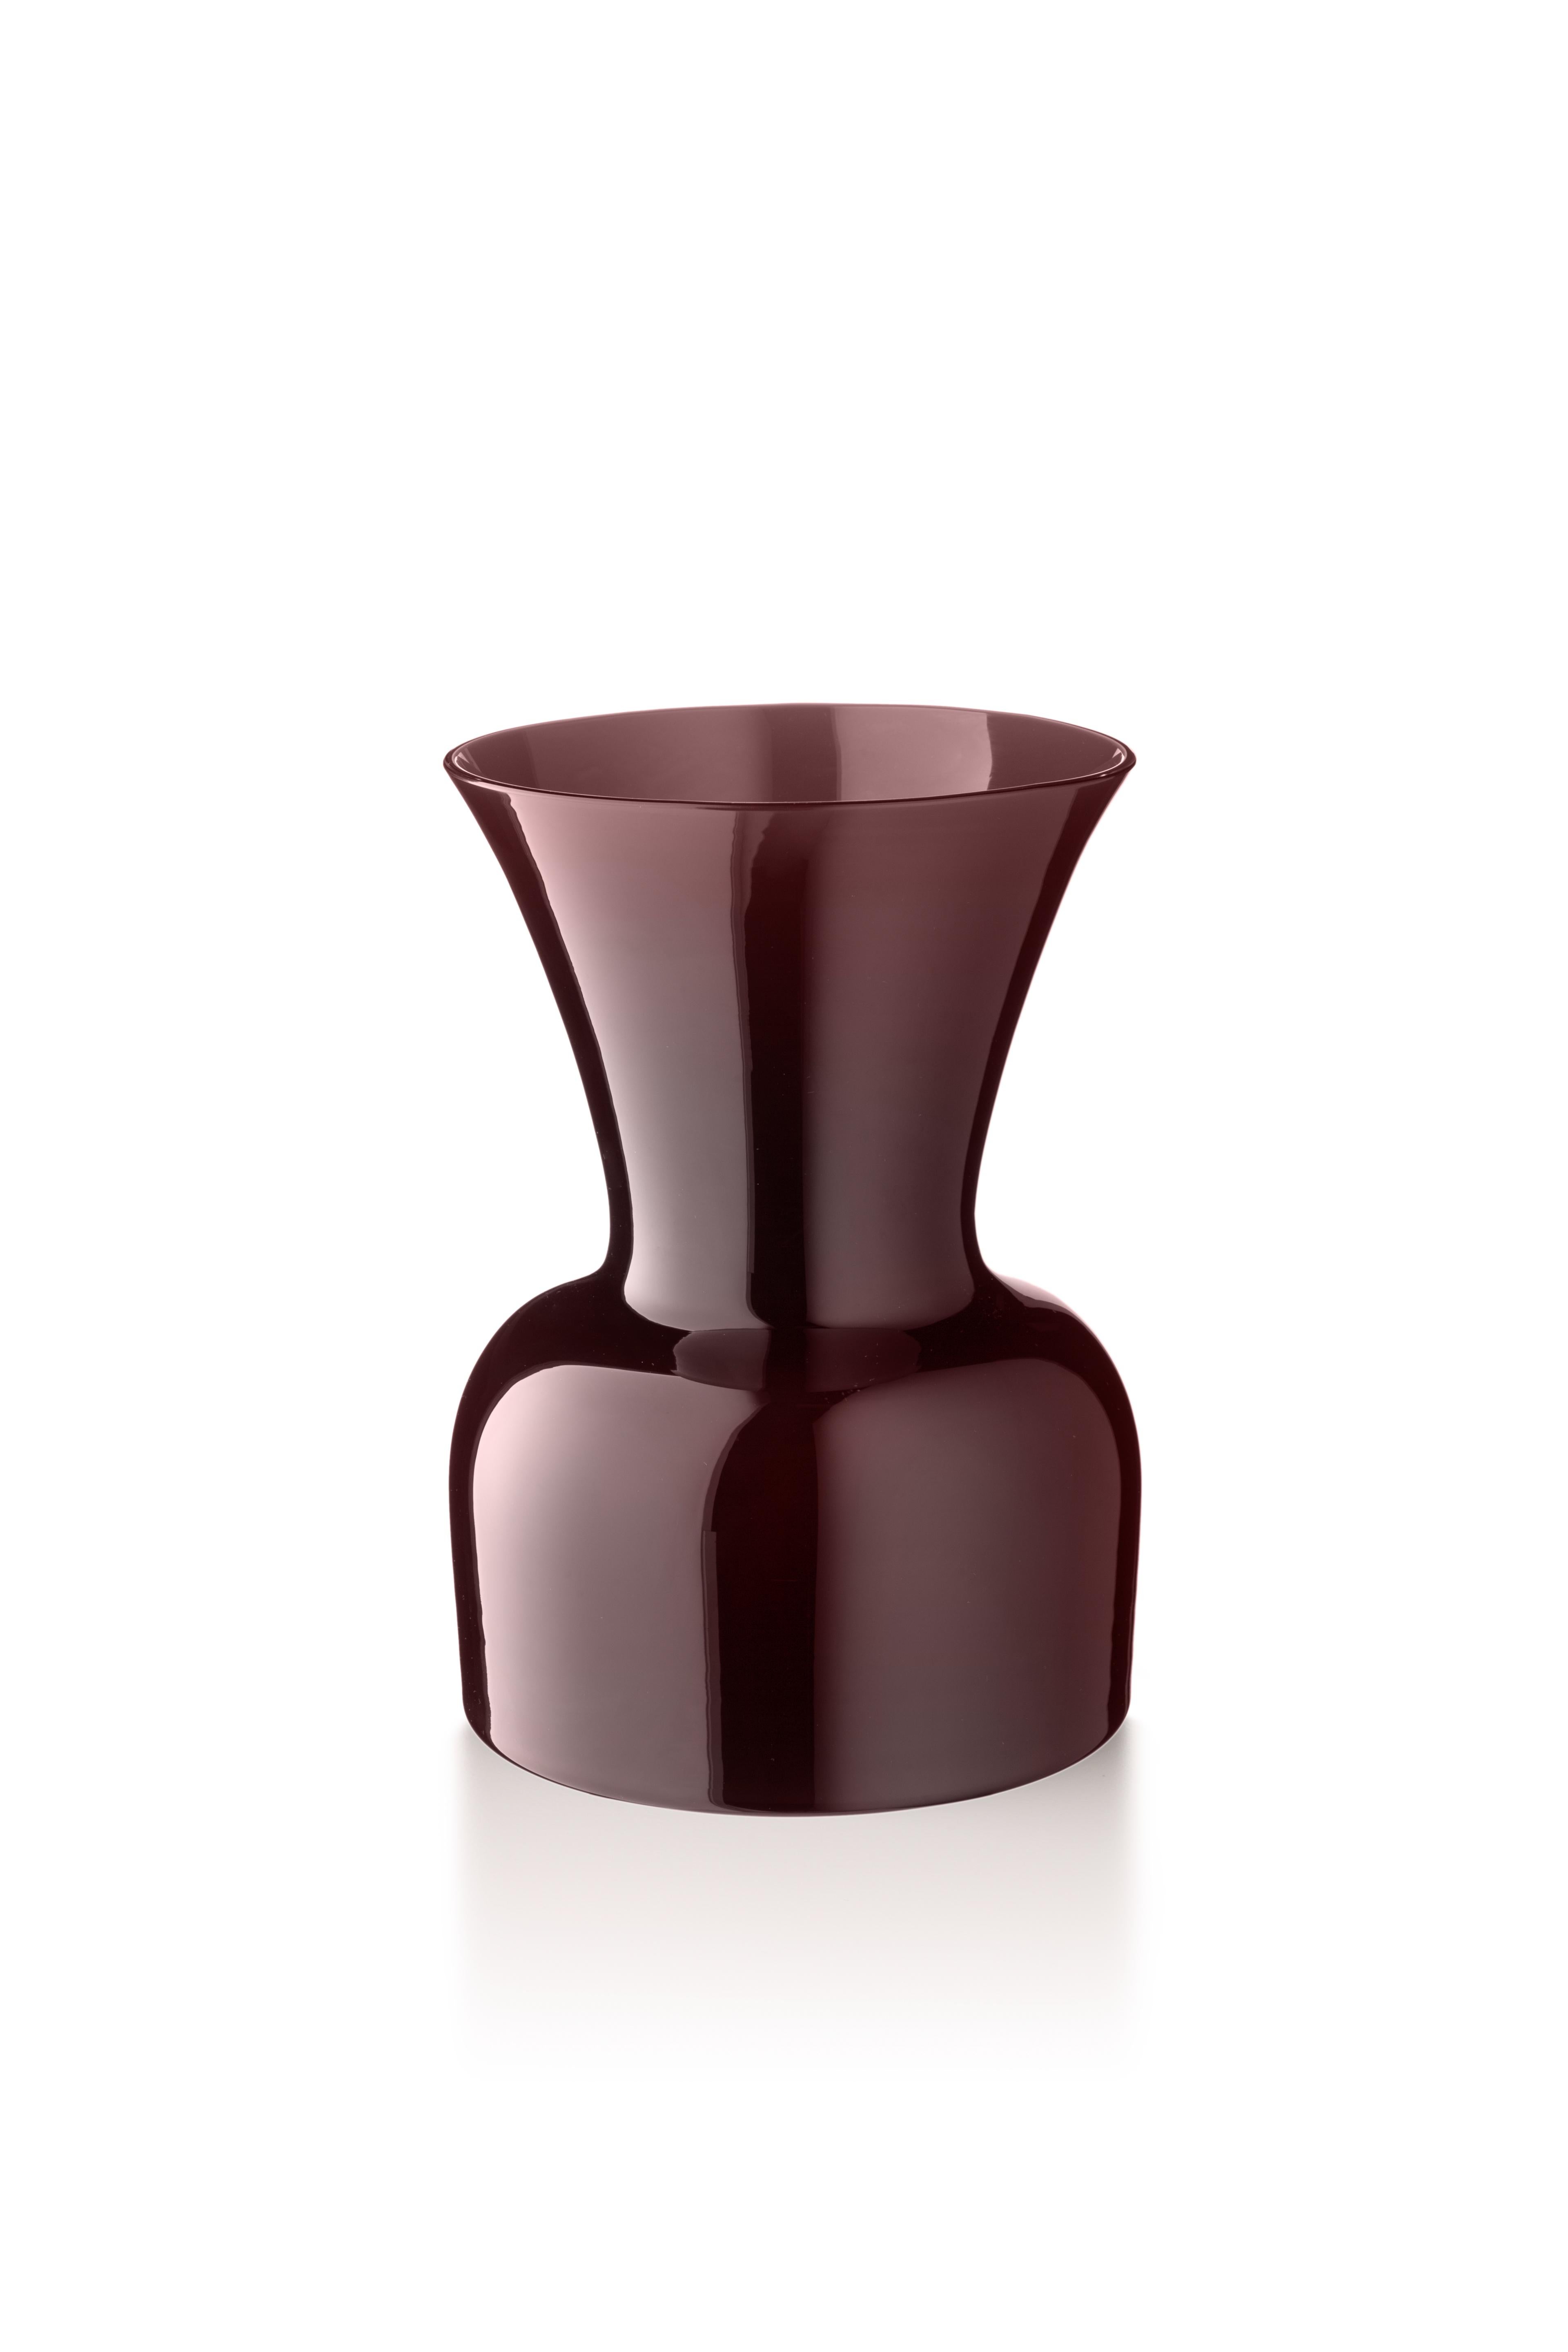 Purple (10061) Medium Profili Daisy Murano Glass Vase by Anna Gili